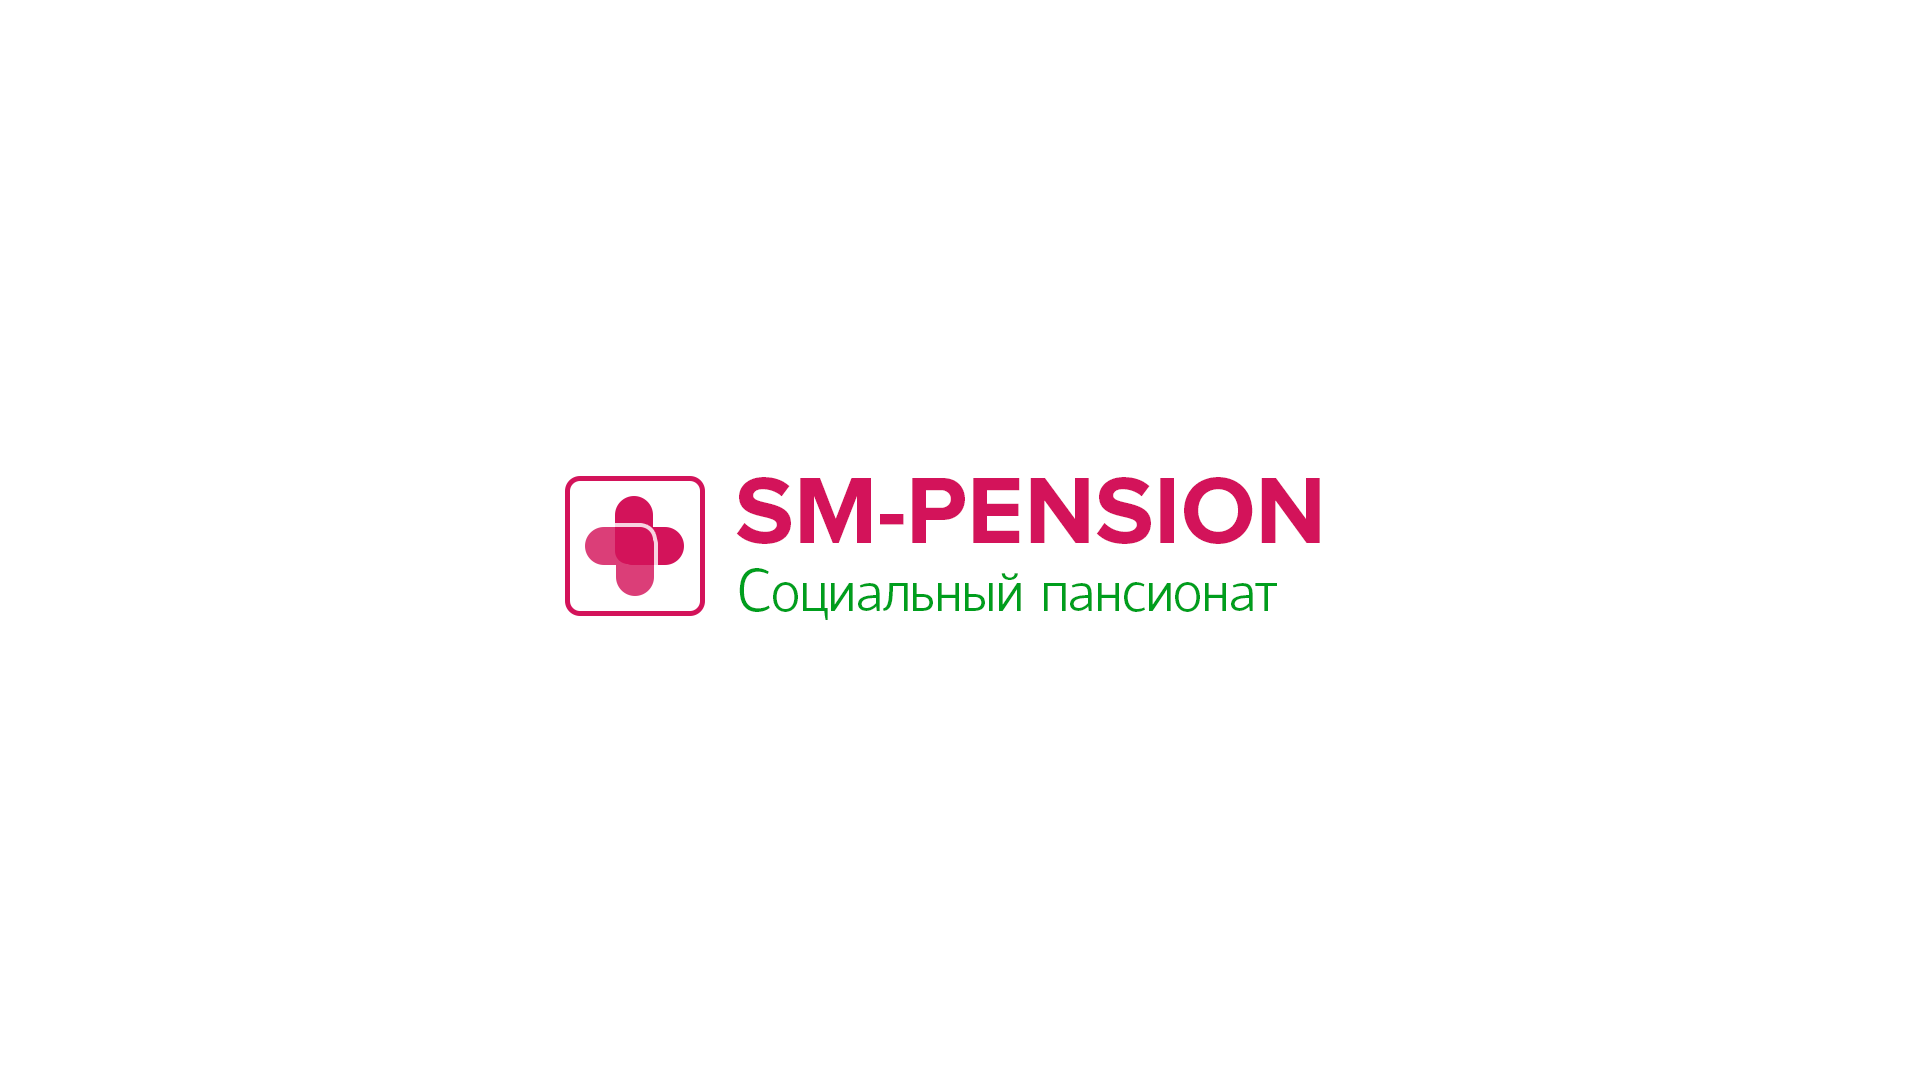 SM-pension